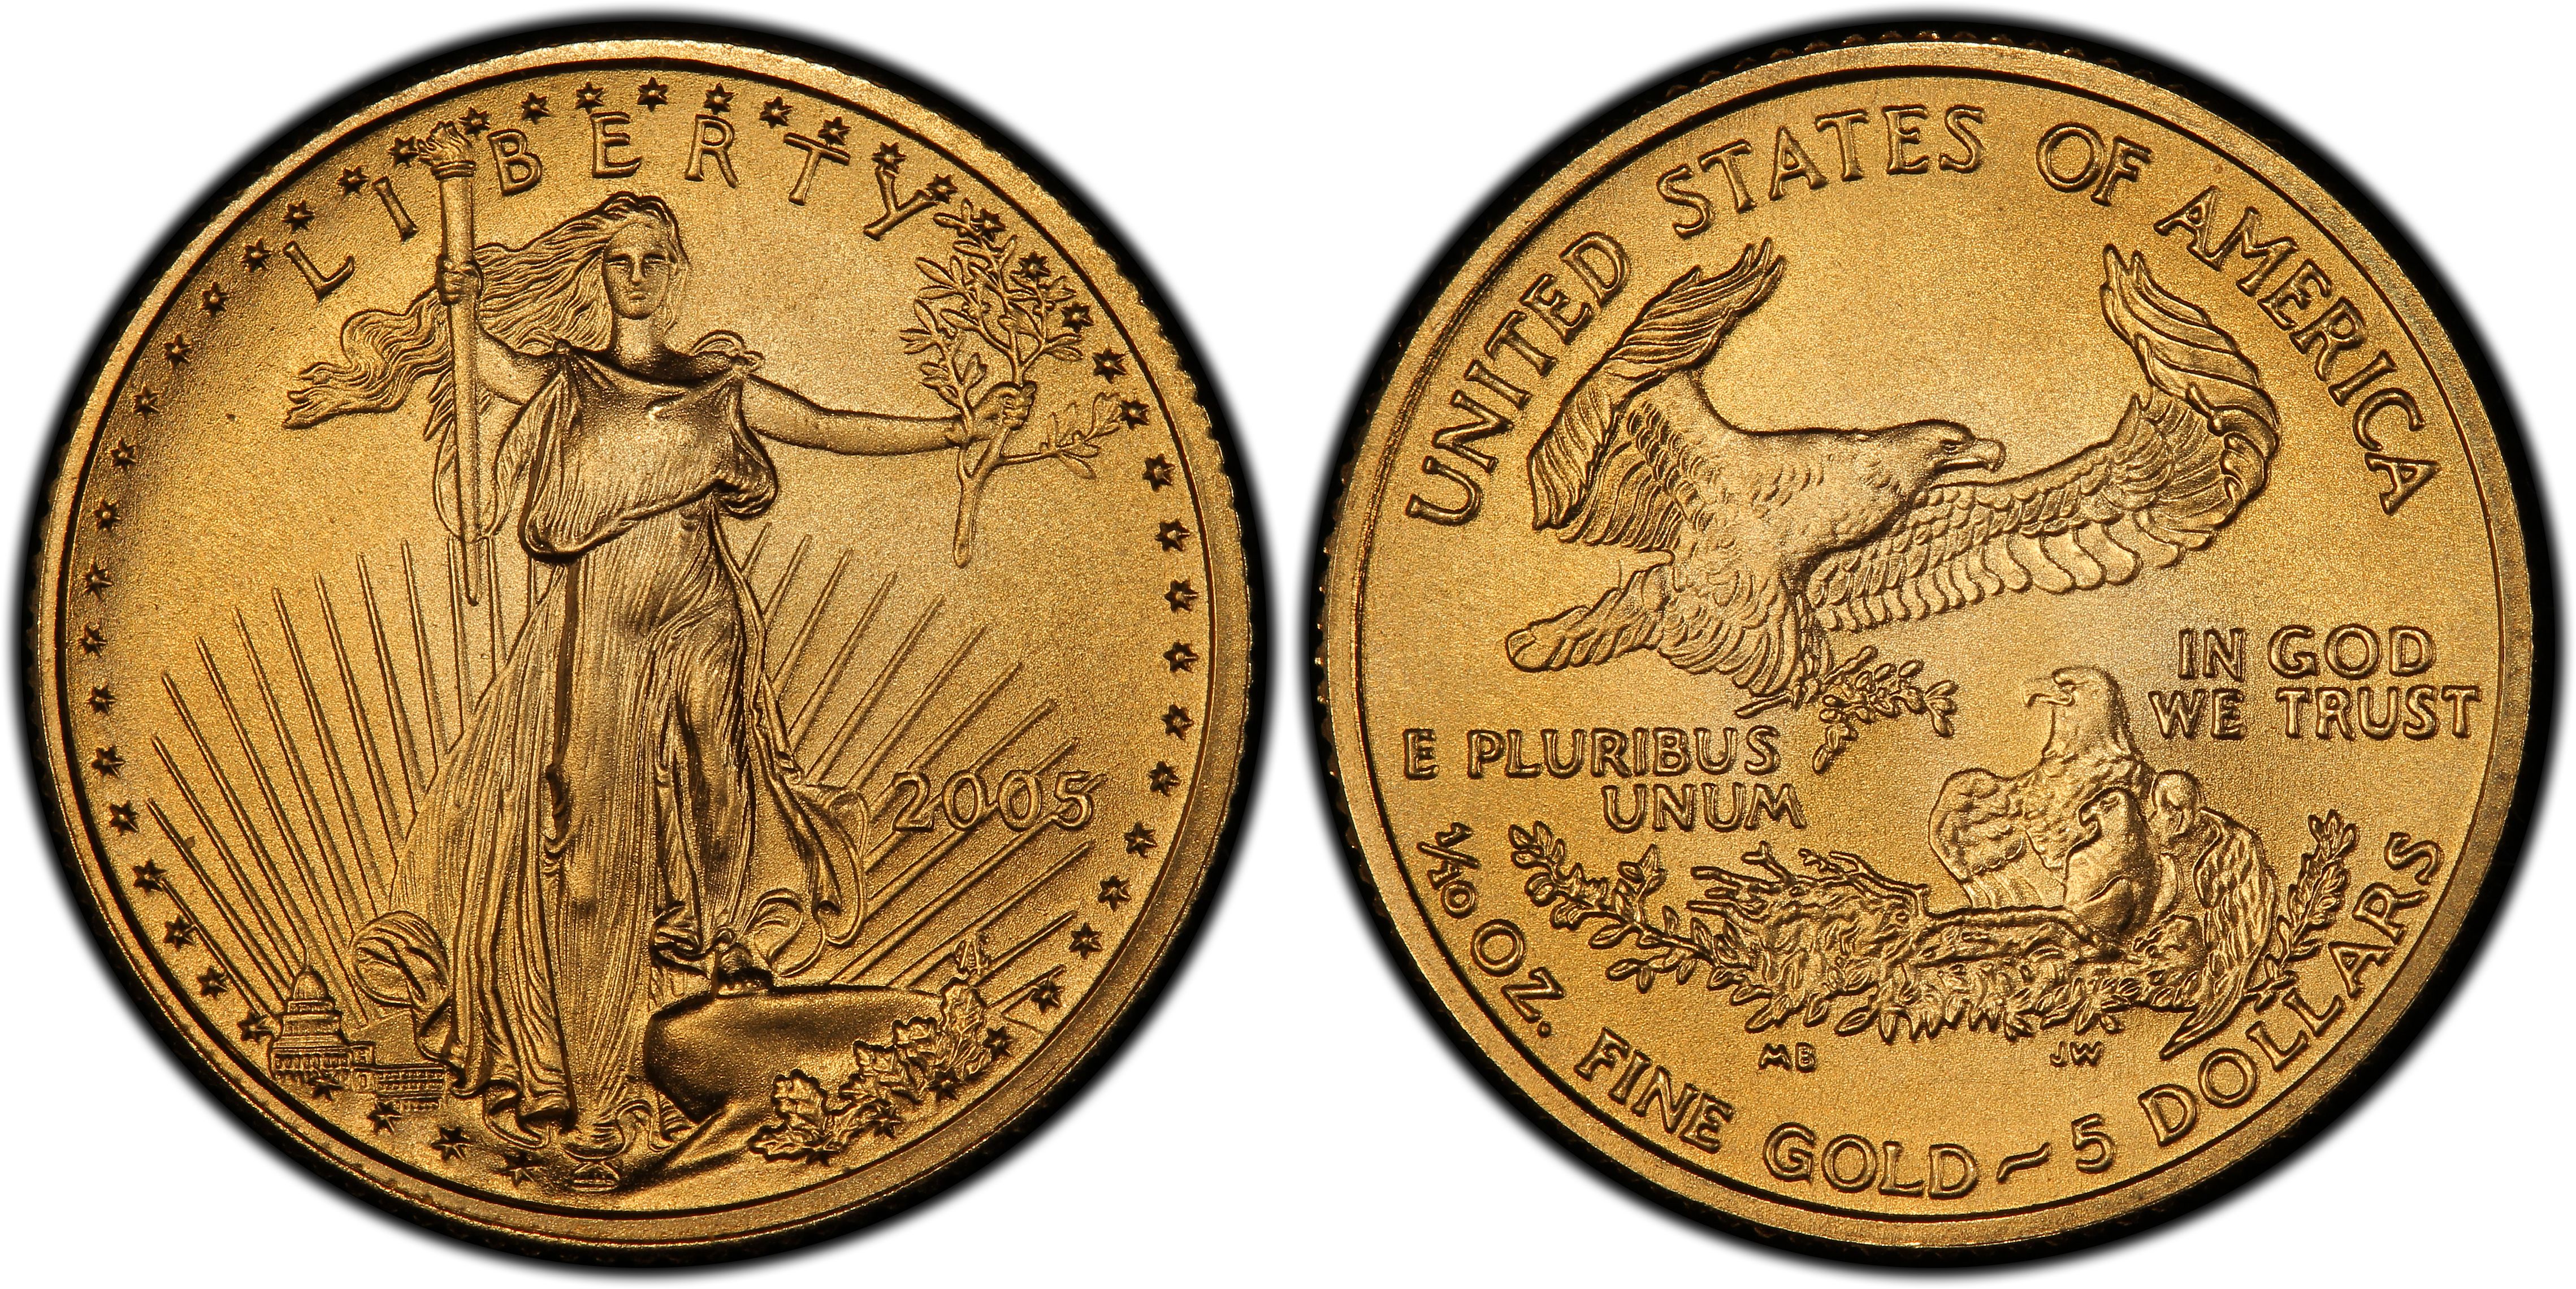 2005 liberty 10 dollar coin